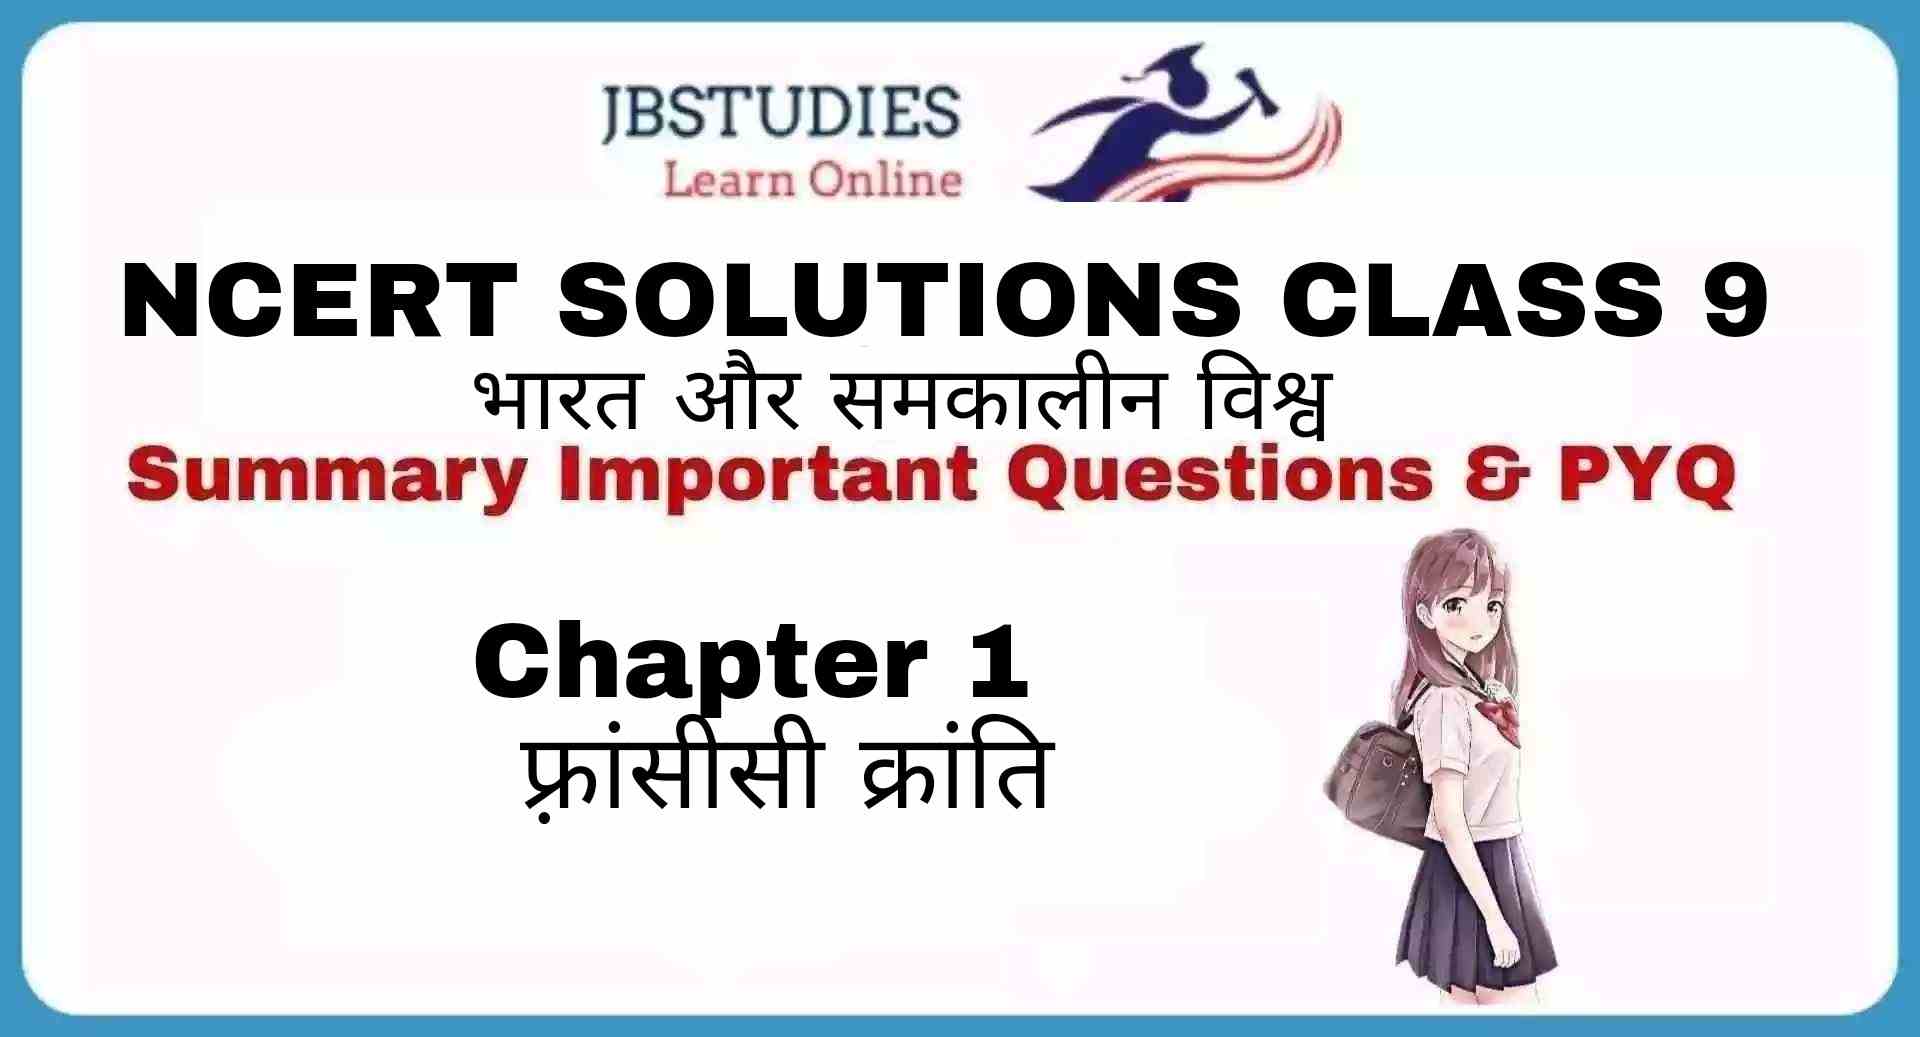 Solutions Class 9 भारत और समकालीन विश्व - I Chapter-1 (फ़्रांसीसी क्रांति)